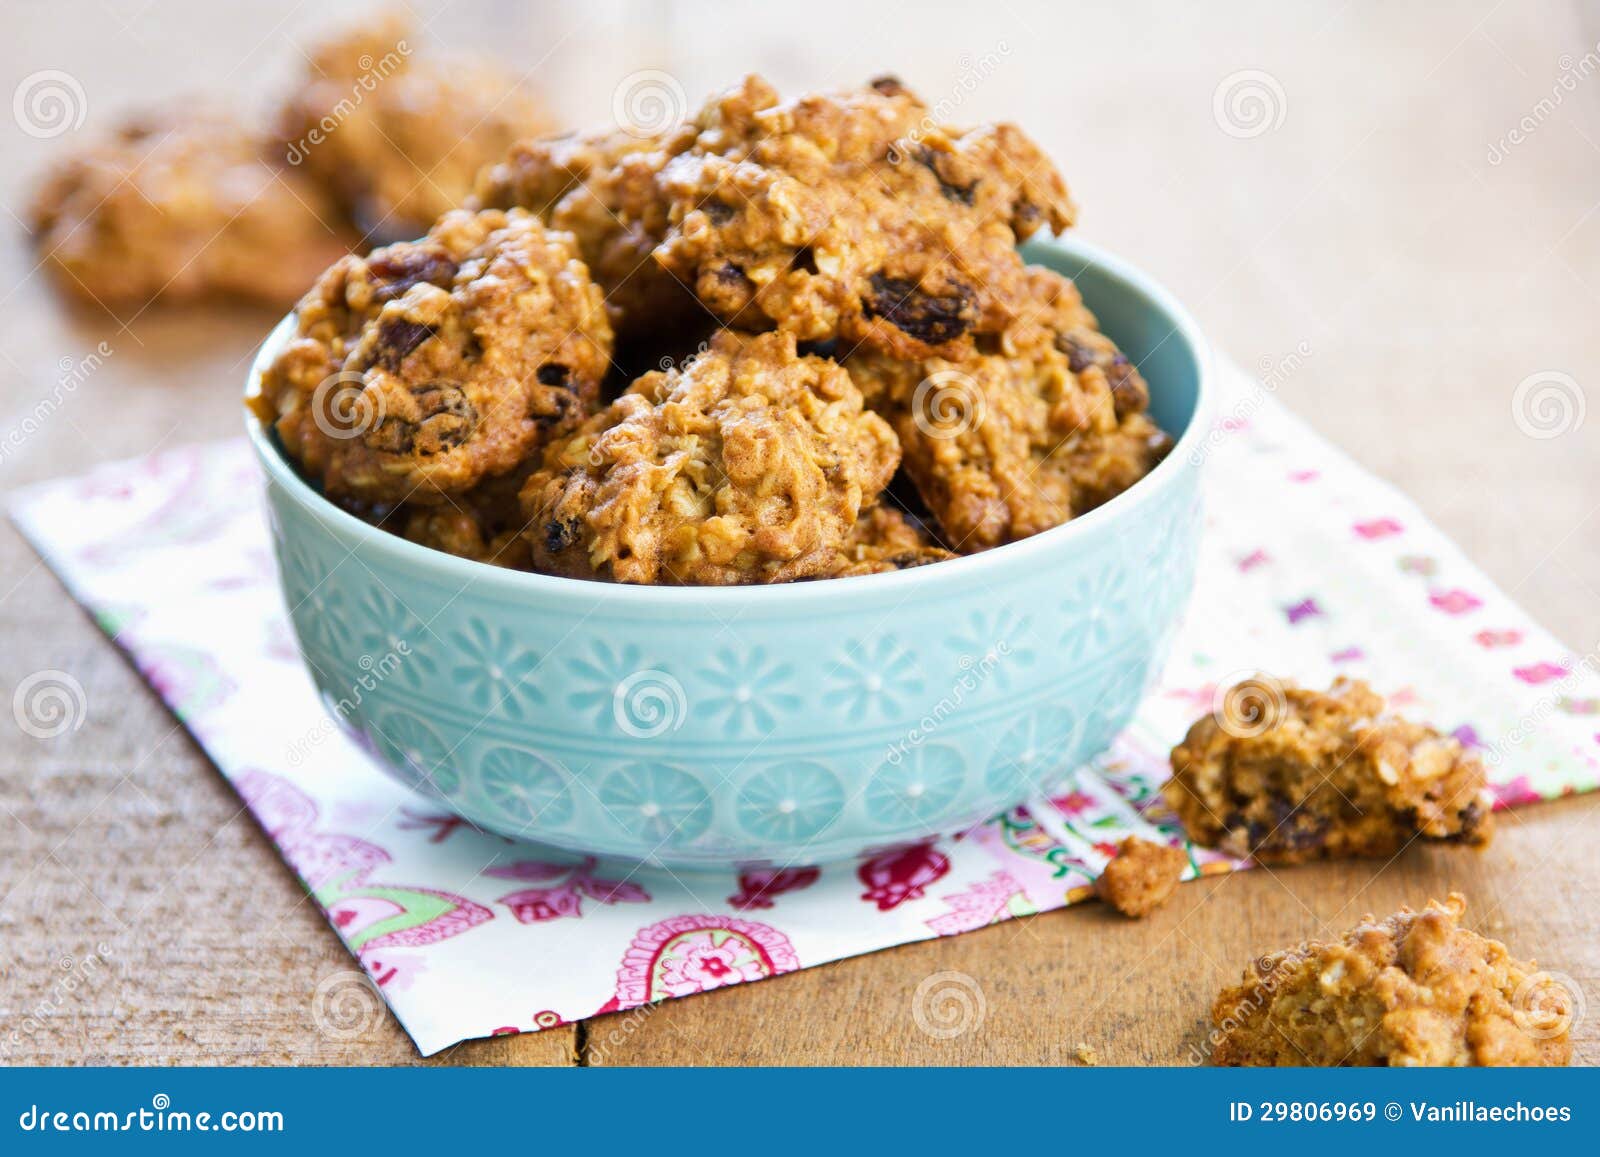 oatmeal and raisin cookies